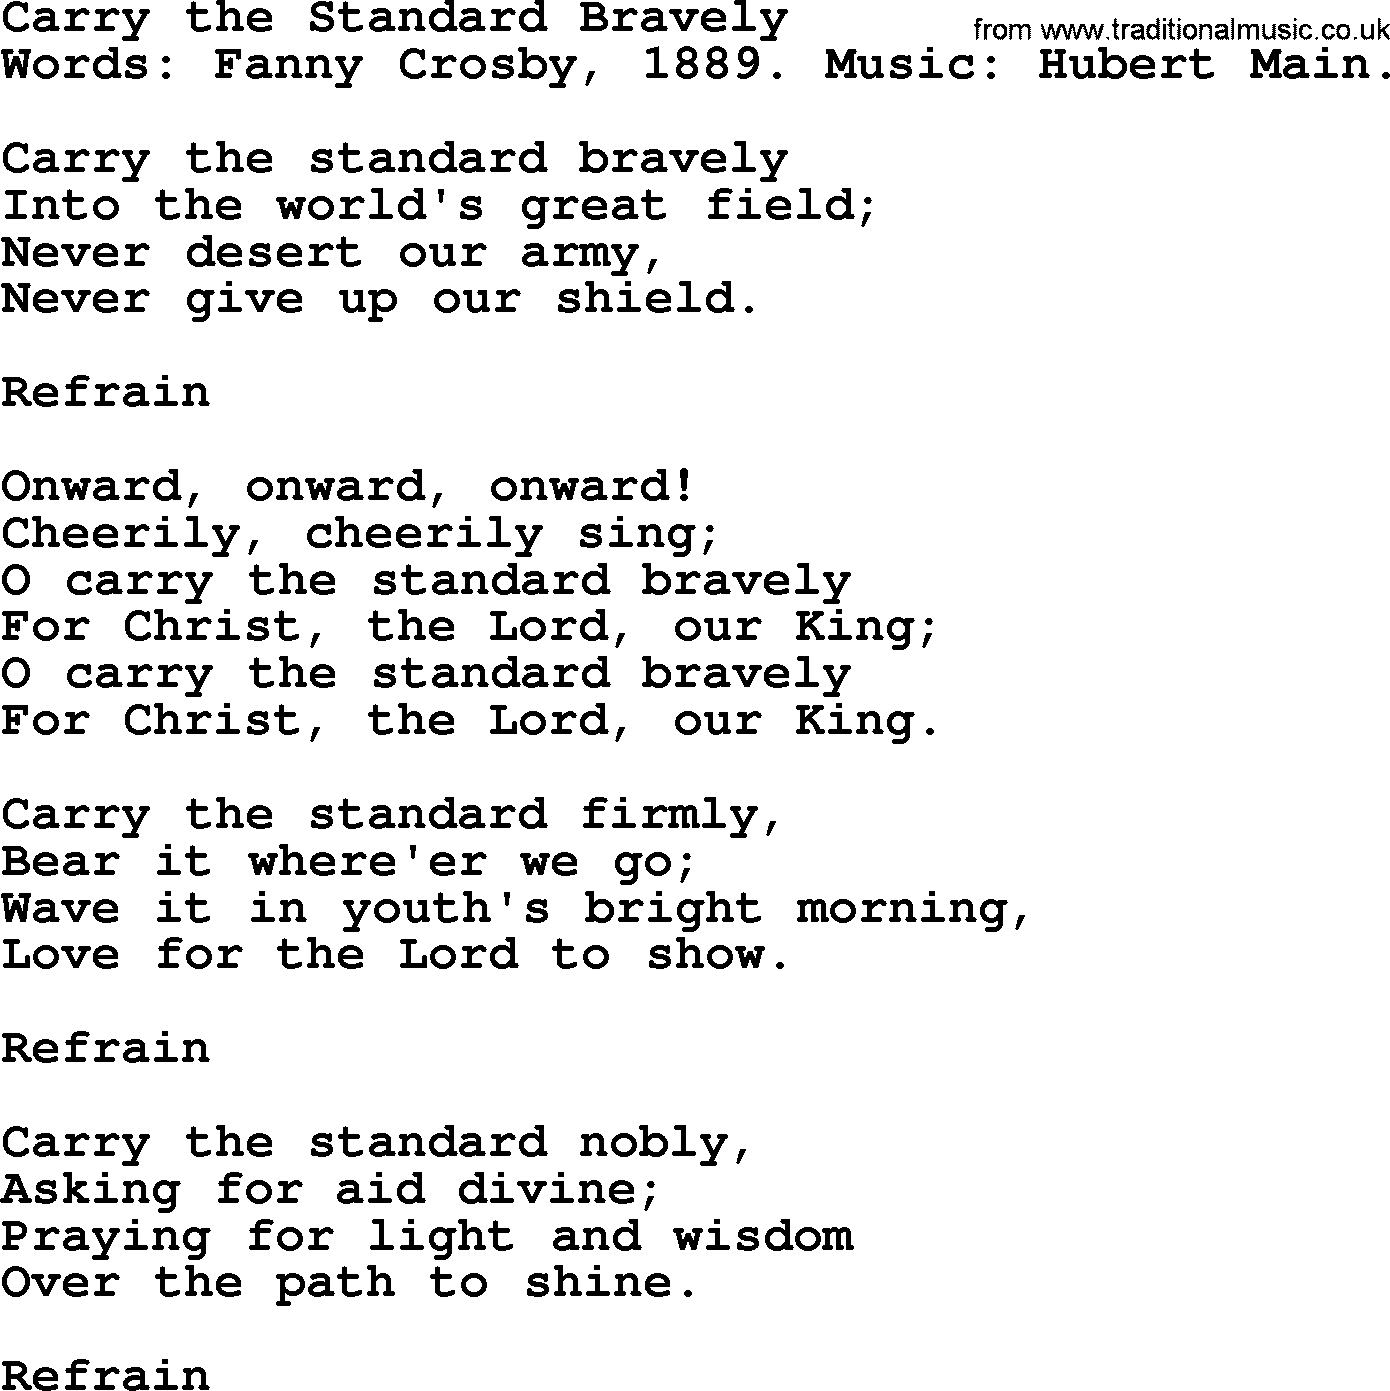 Fanny Crosby song: Carry The Standard Bravely, lyrics